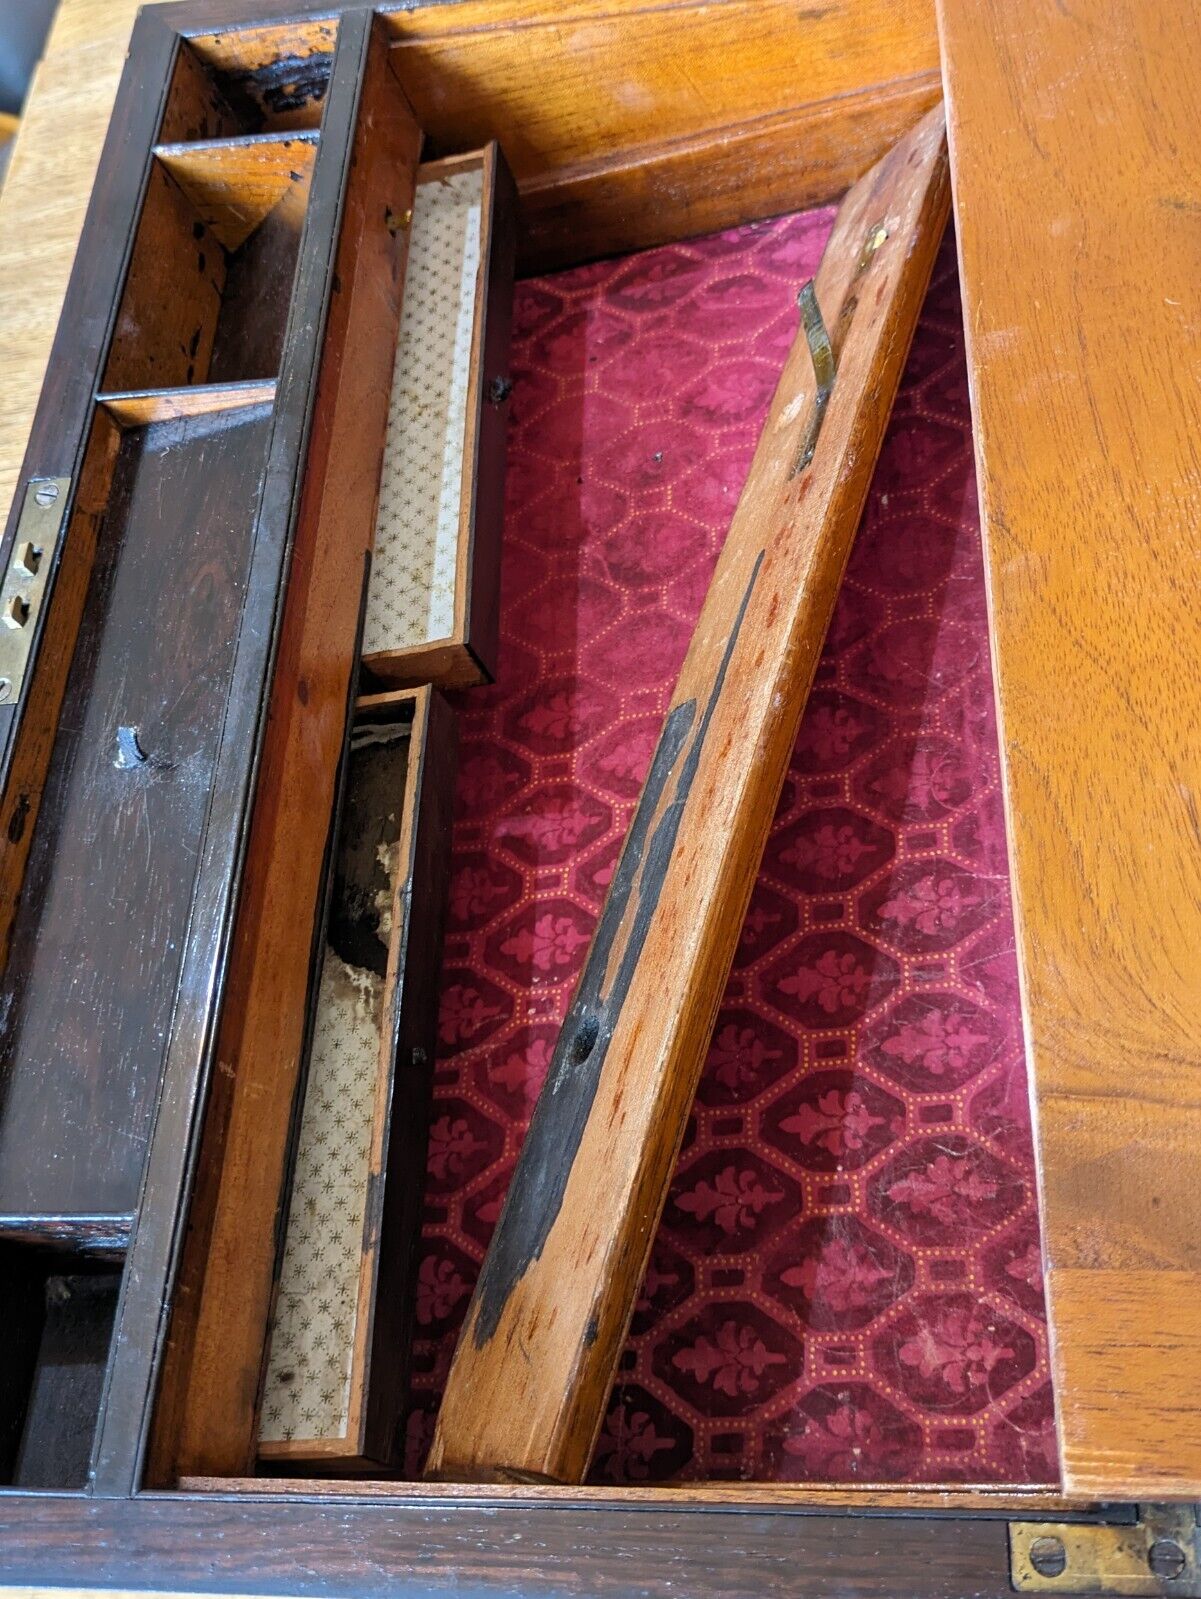 Early 19th Century Regency Mahogany Brass Bound Campaign Writing Slope Box + Key